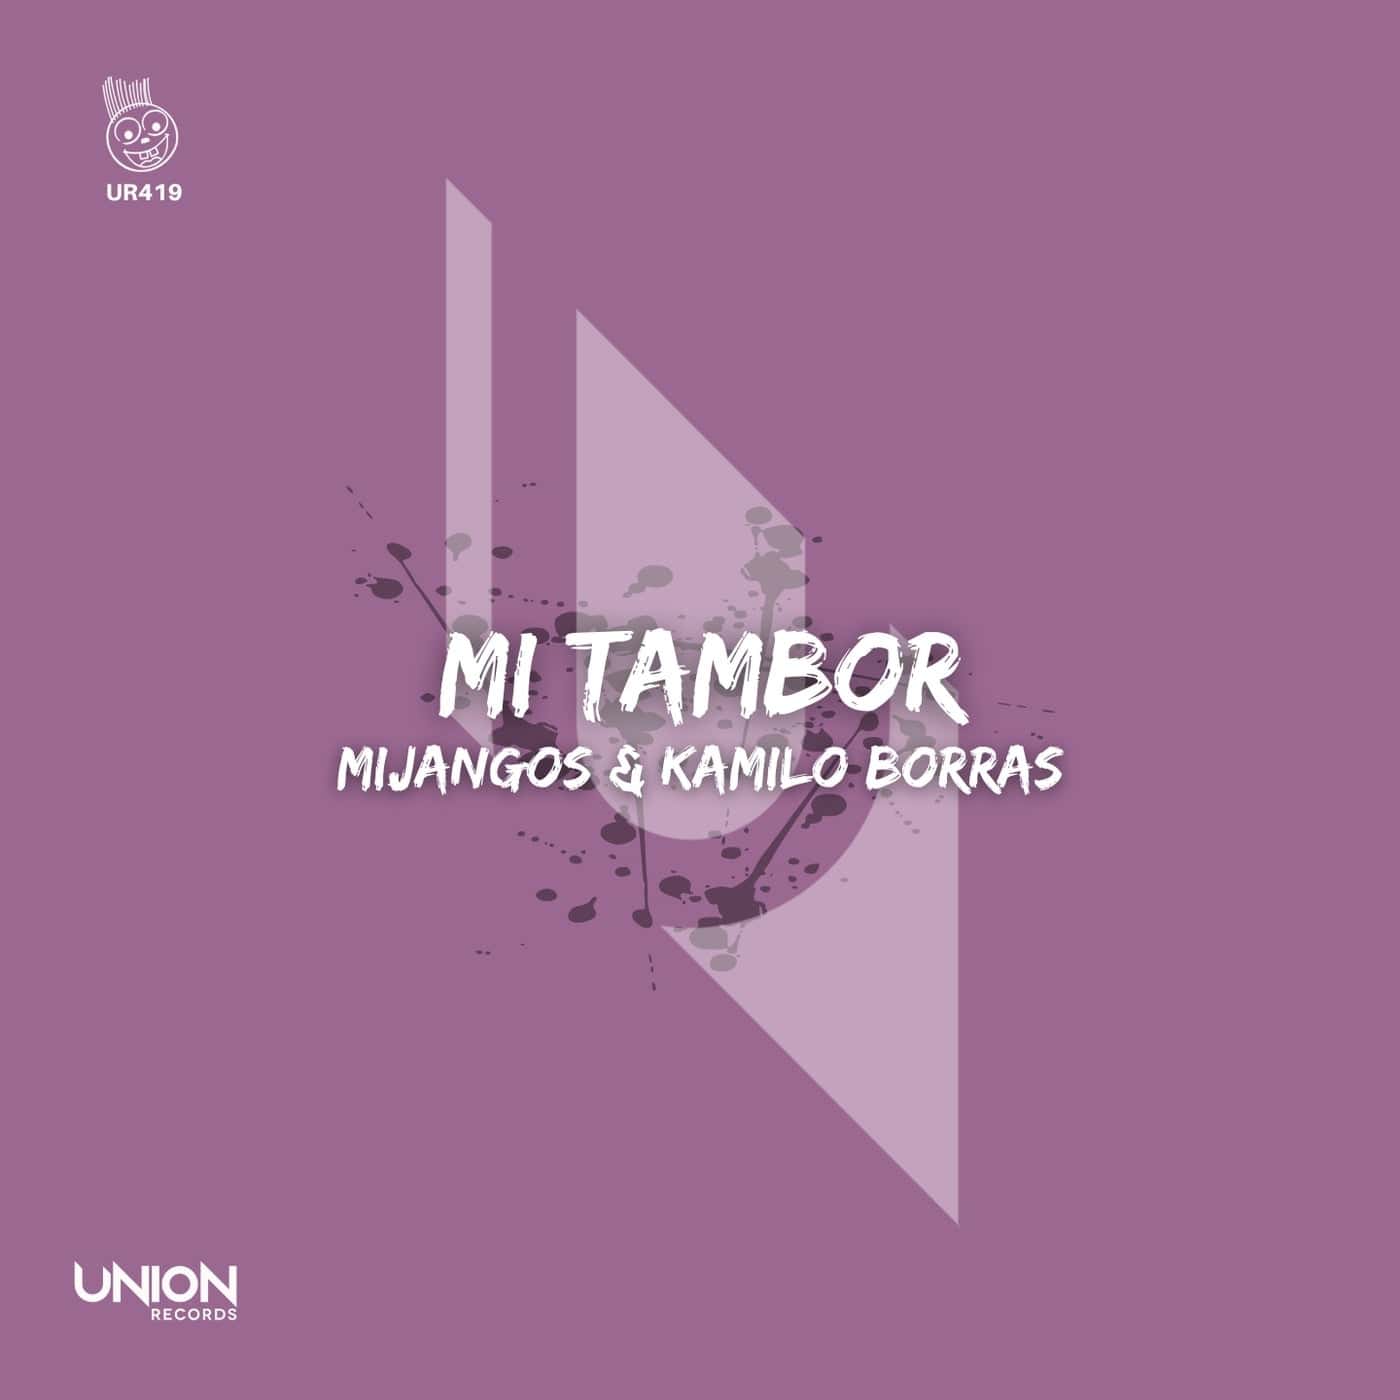 Download Mijangos, Kamilo Borras - Mi Tambor on Electrobuzz